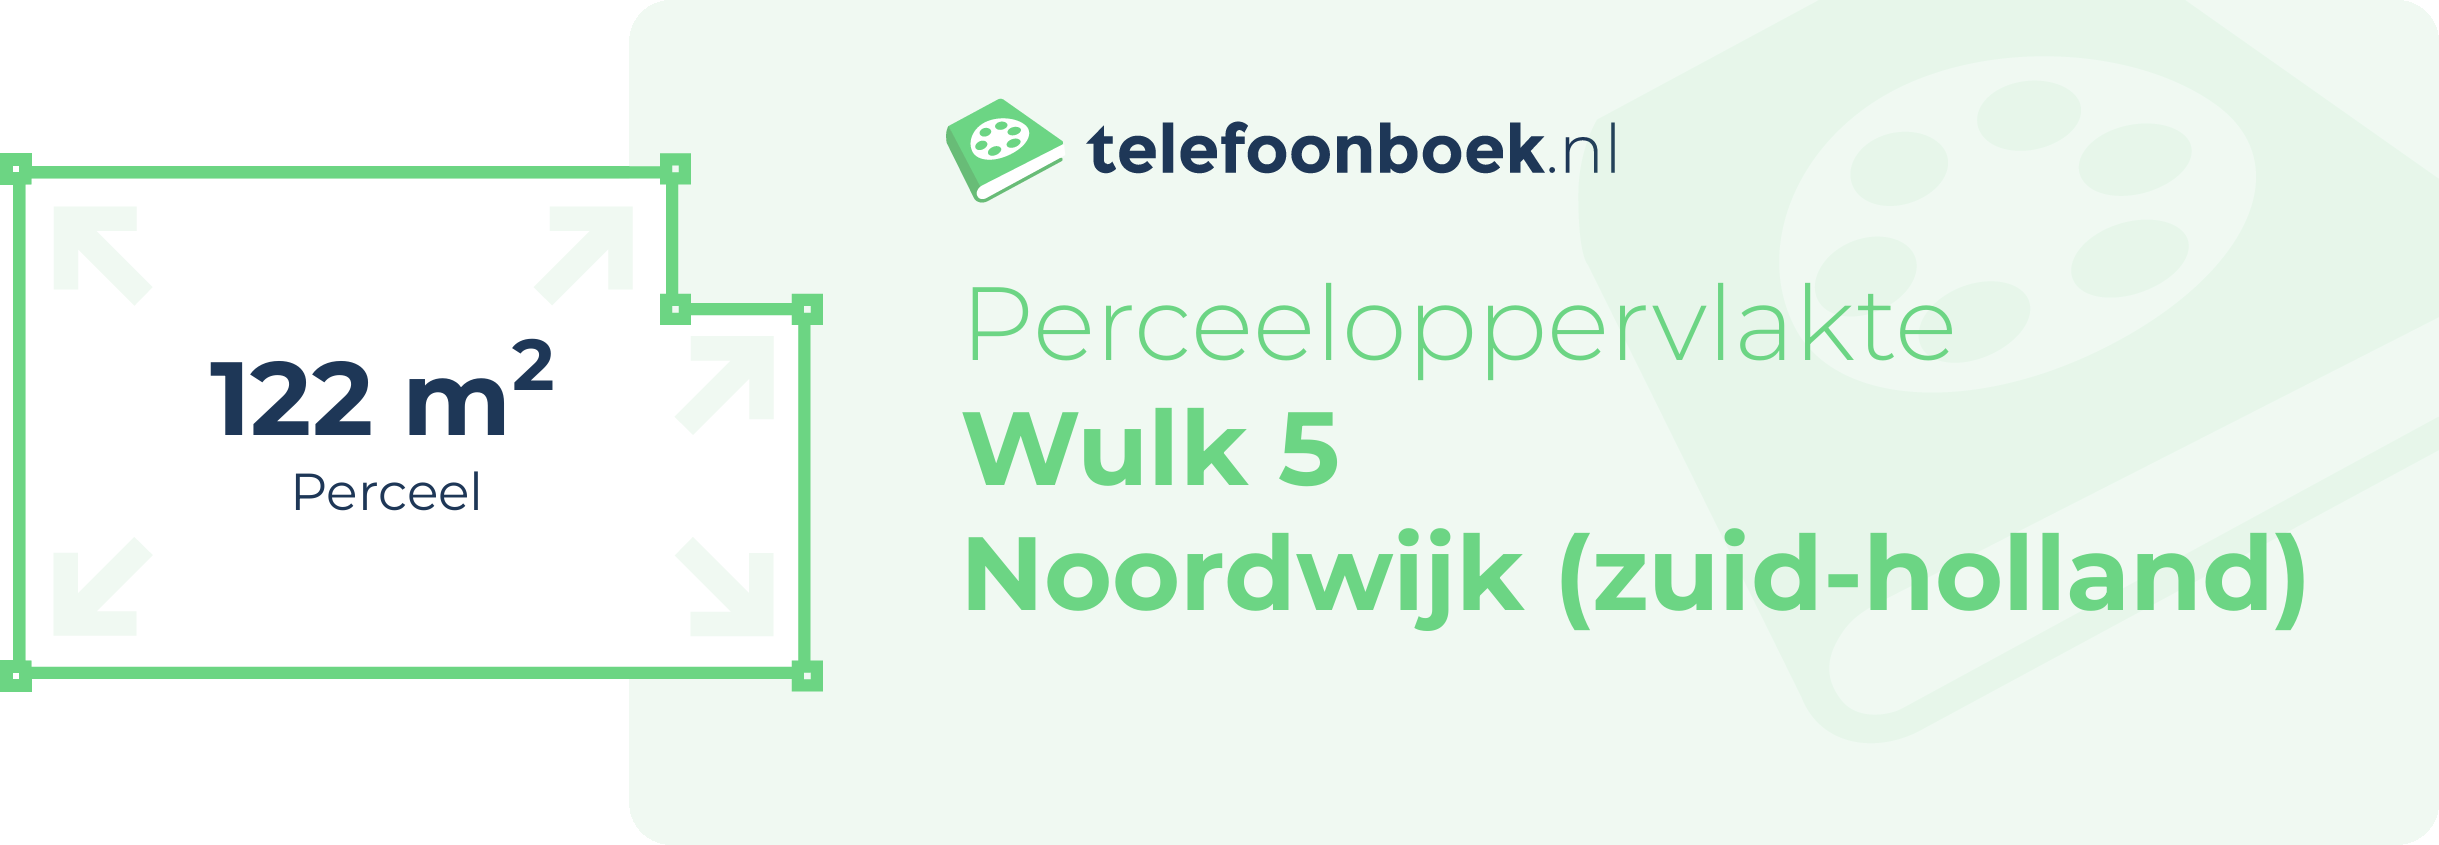 Perceeloppervlakte Wulk 5 Noordwijk (Zuid-Holland)